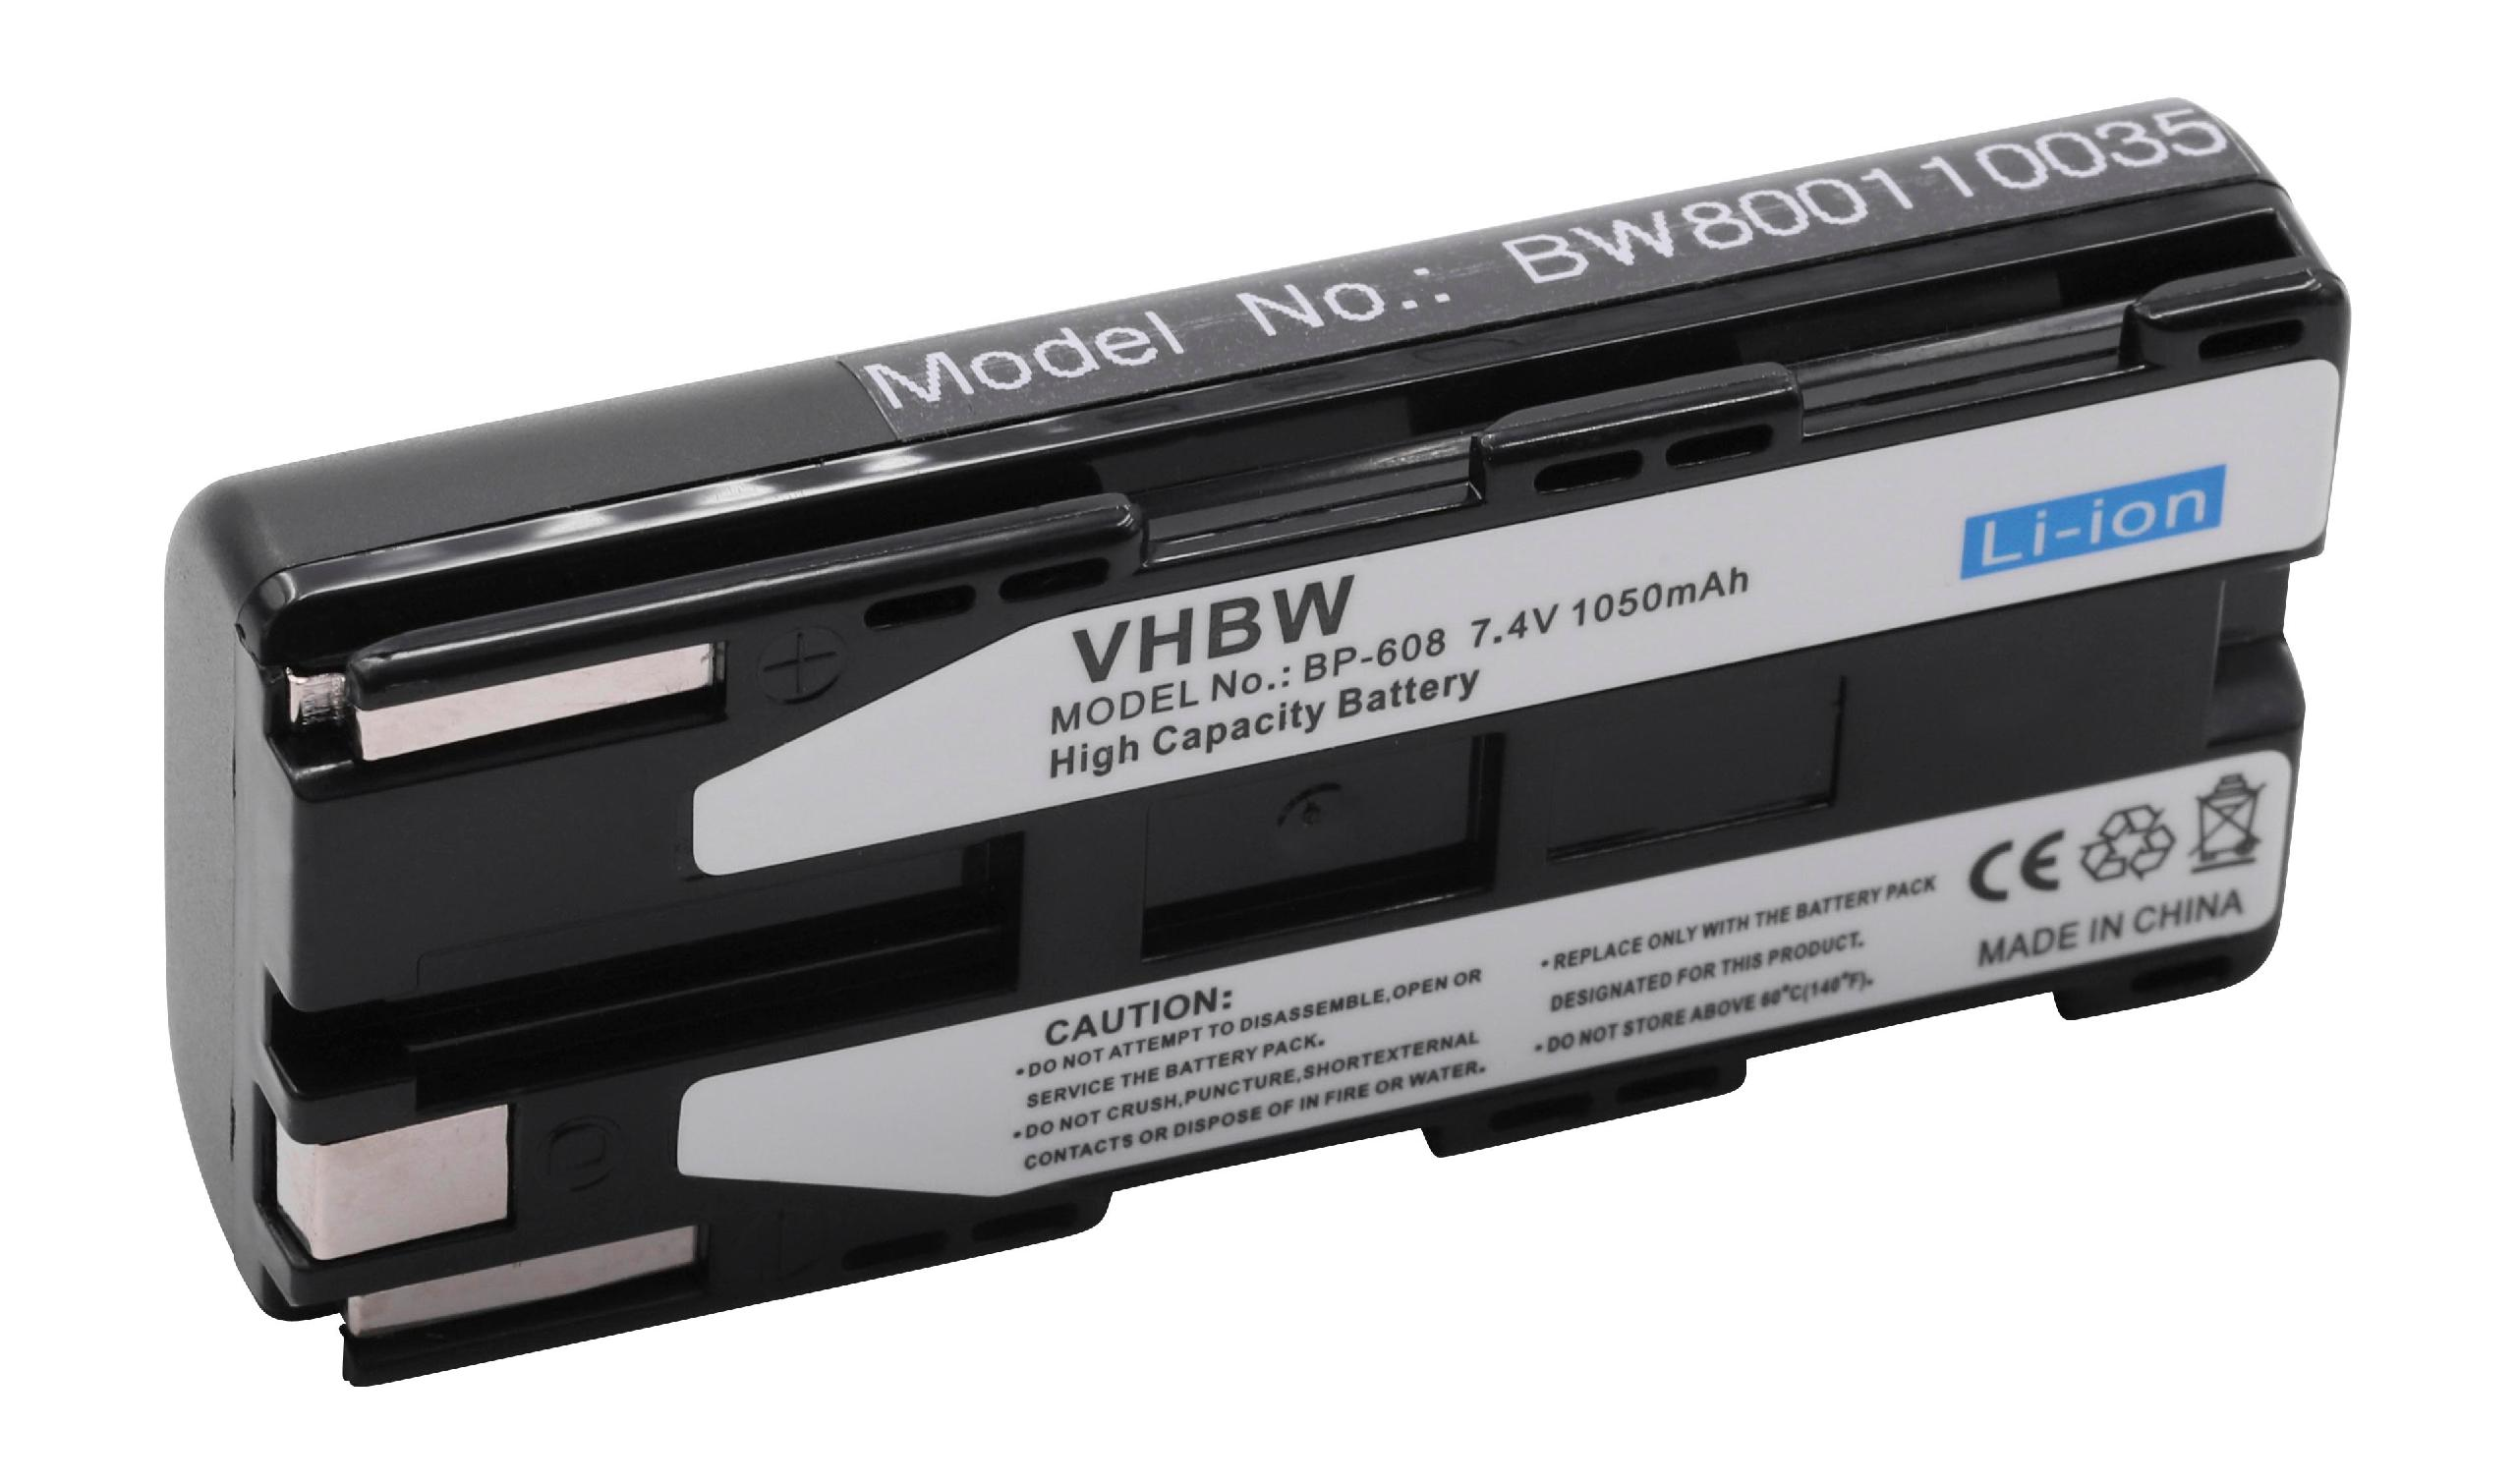 VHBW Ersatz für Canon 1050 Li-Ion Akku für BP-608, - BP-608A Videokamera, 7.4 Volt